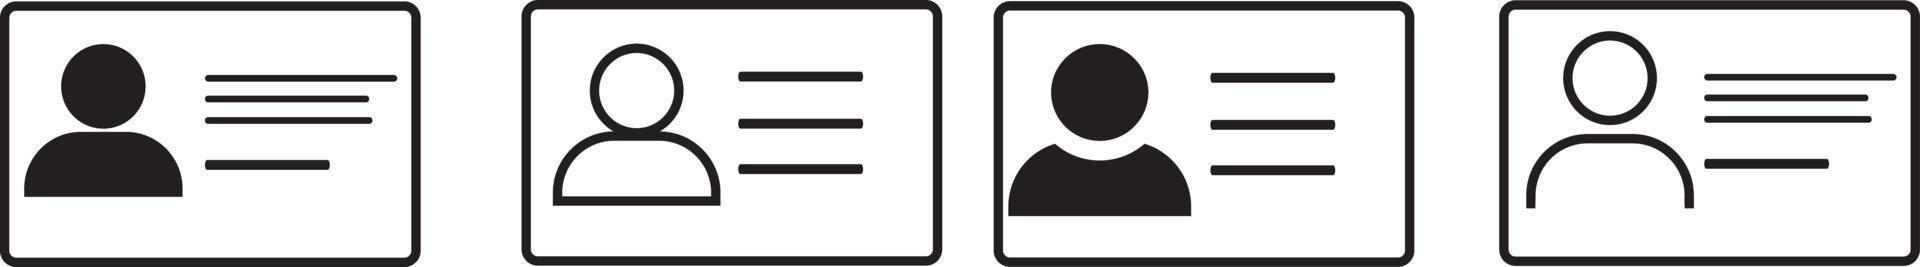 ID-kaart icon set, rijbewijs identiteitskaart symbool, bewerkbare slag. vector illustratie